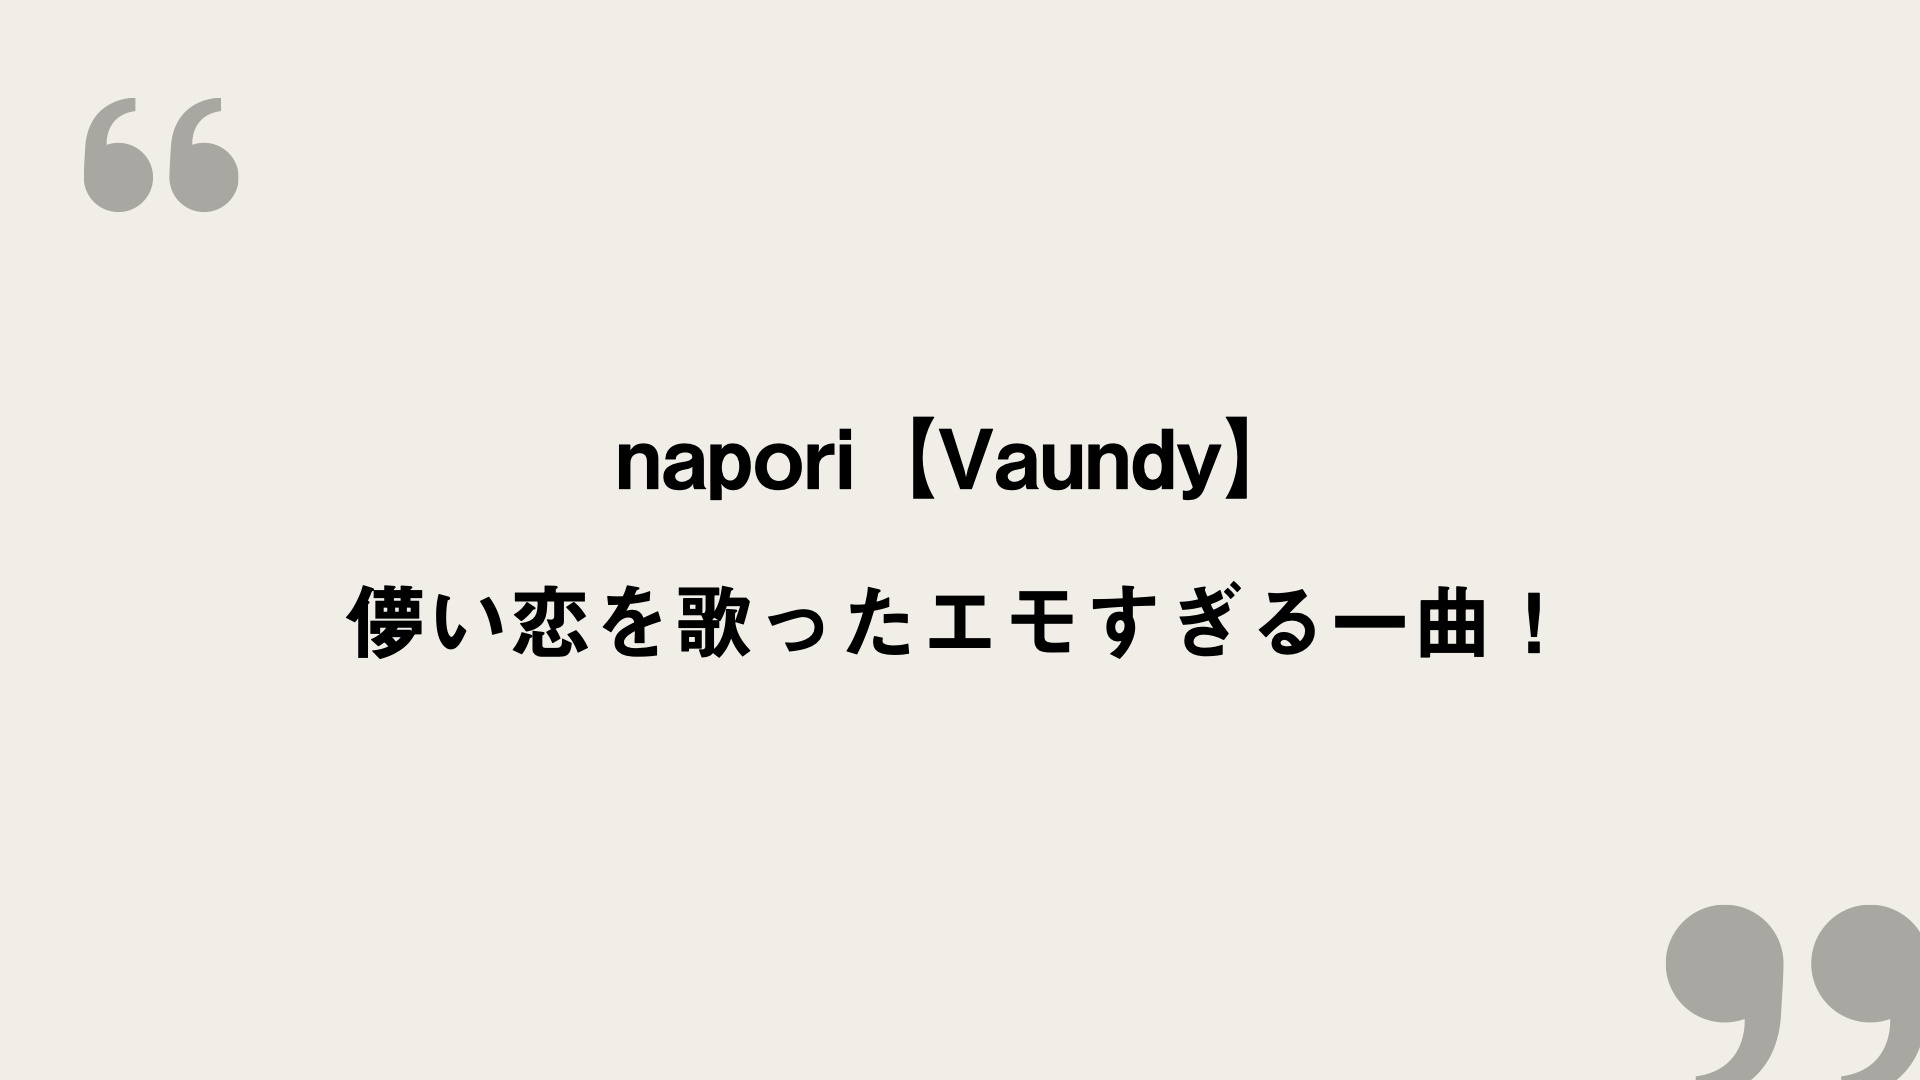 Napori Vaundy 歌詞の意味を考察 儚い恋を歌ったエモすぎる一曲 Framu Media